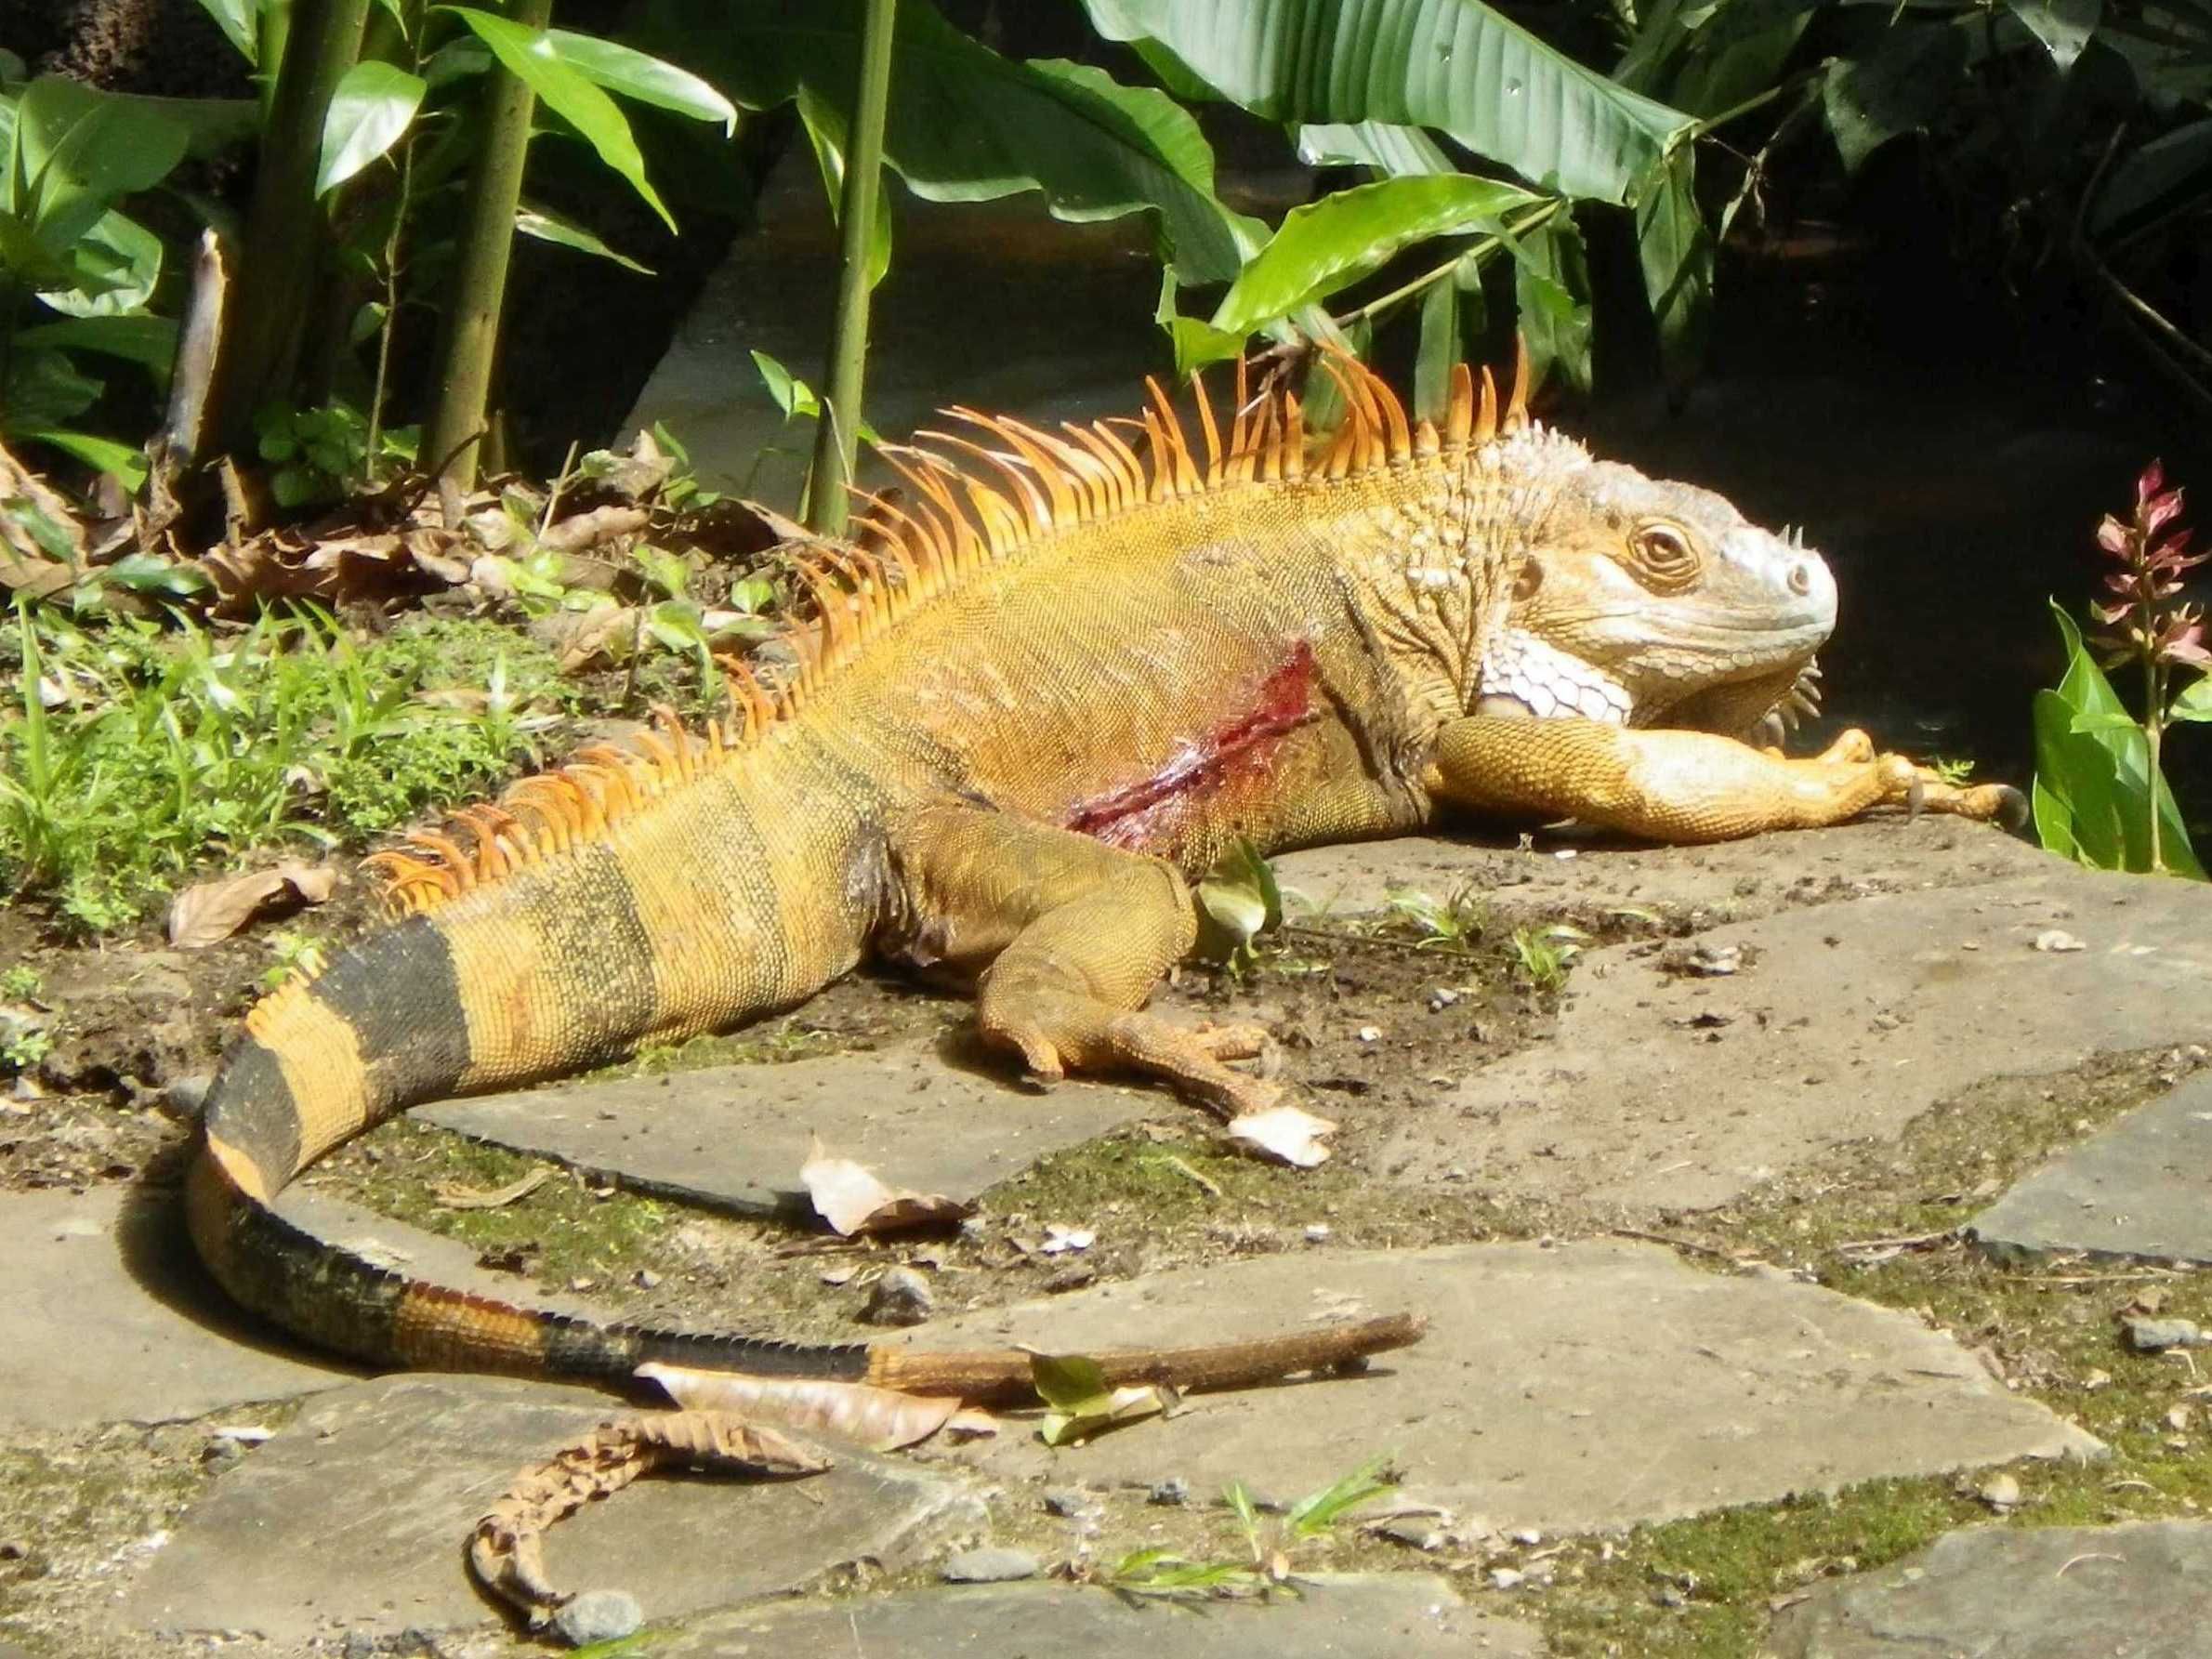 big orange iguanas in florida - Google Search | Iguanas are awesome ...